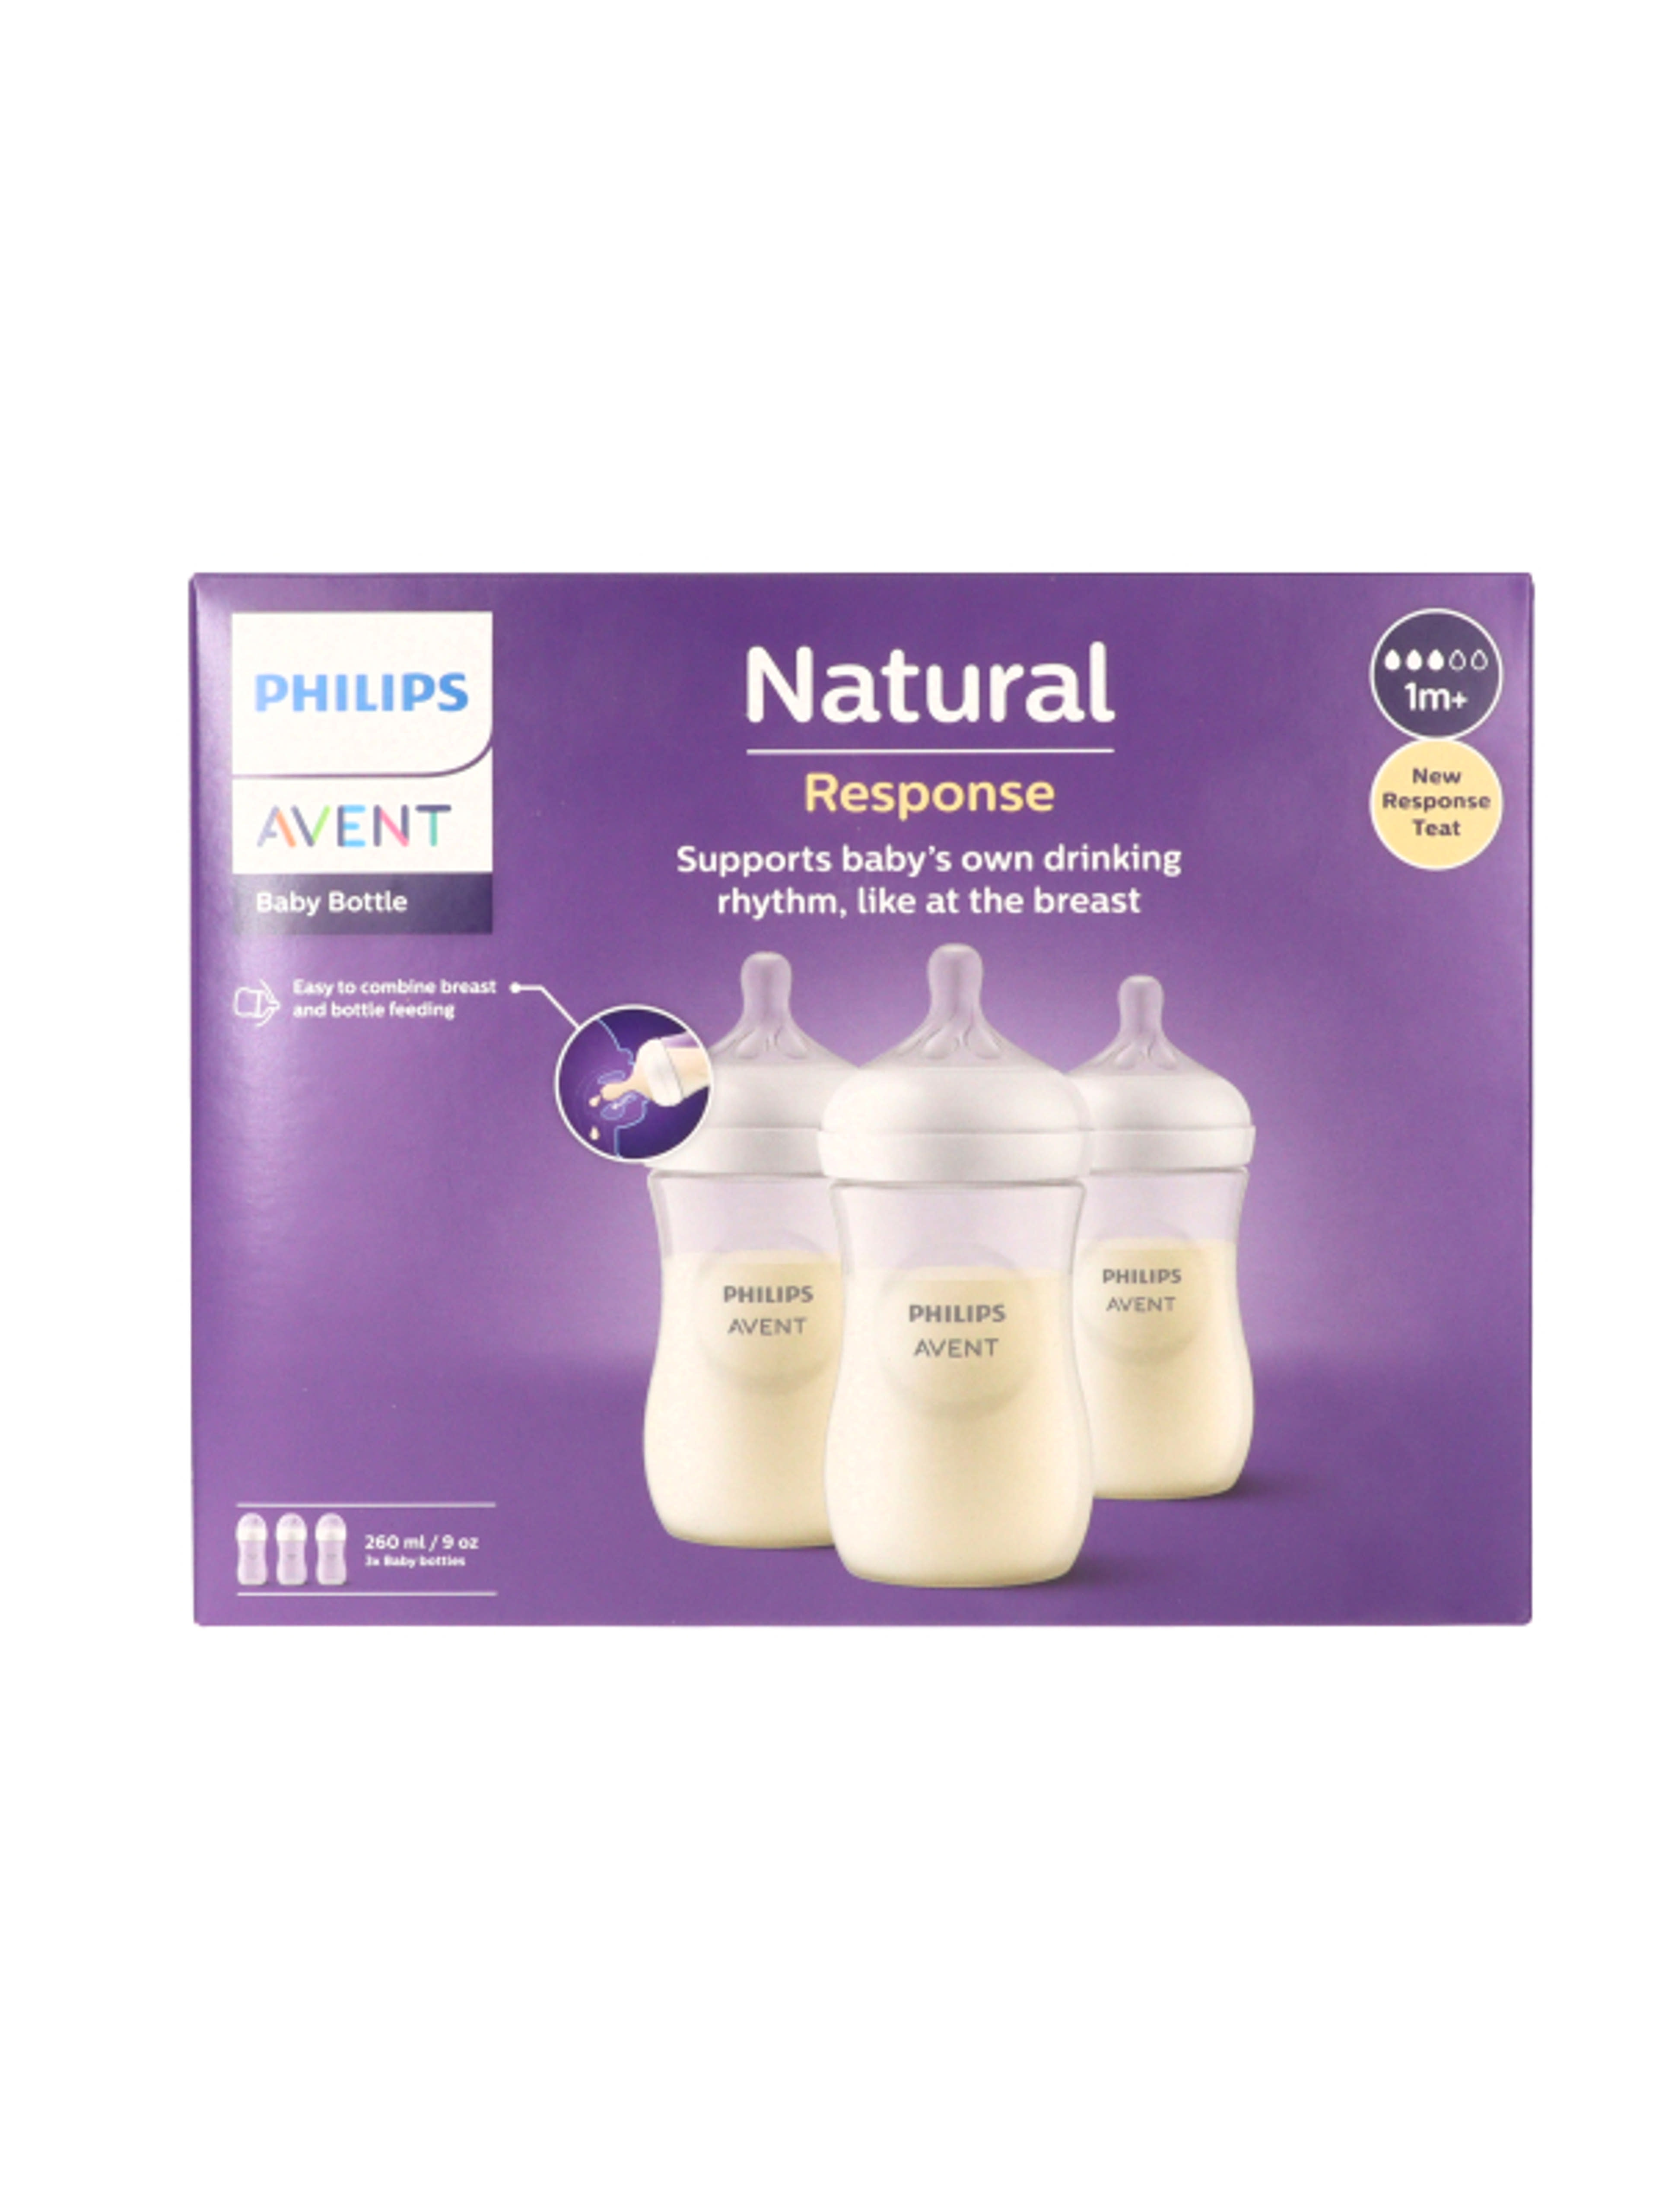 Philips Avent Natural Response cumisüveg 1 hónapos kortól 260 ml - 3 db